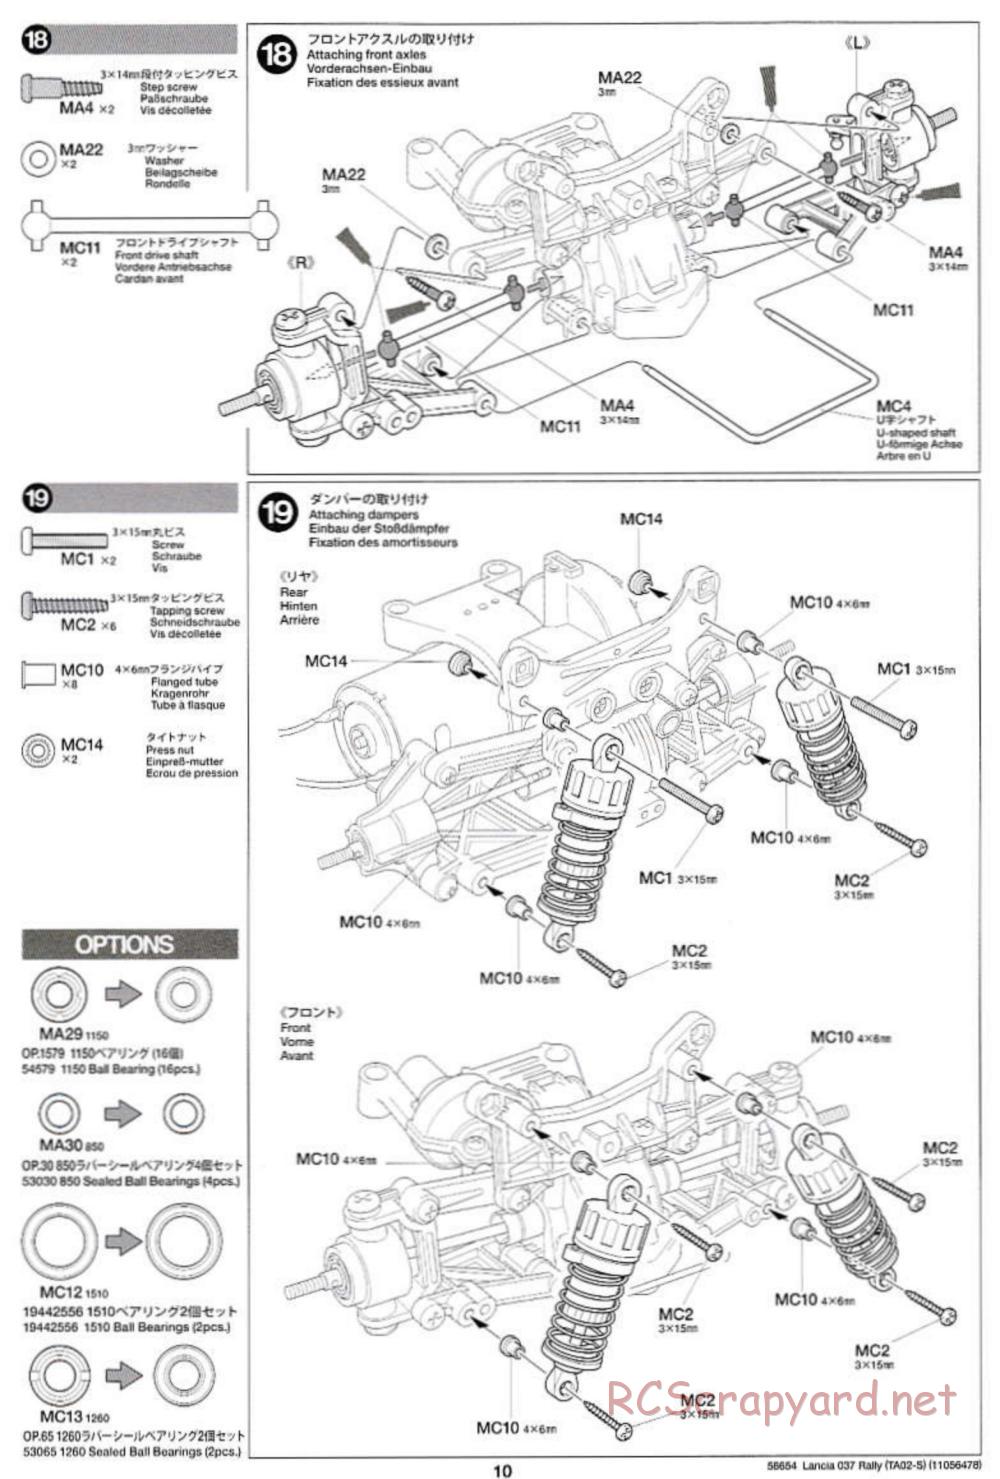 Tamiya - Lancia 037 Rally Chassis - Manual - Page 10